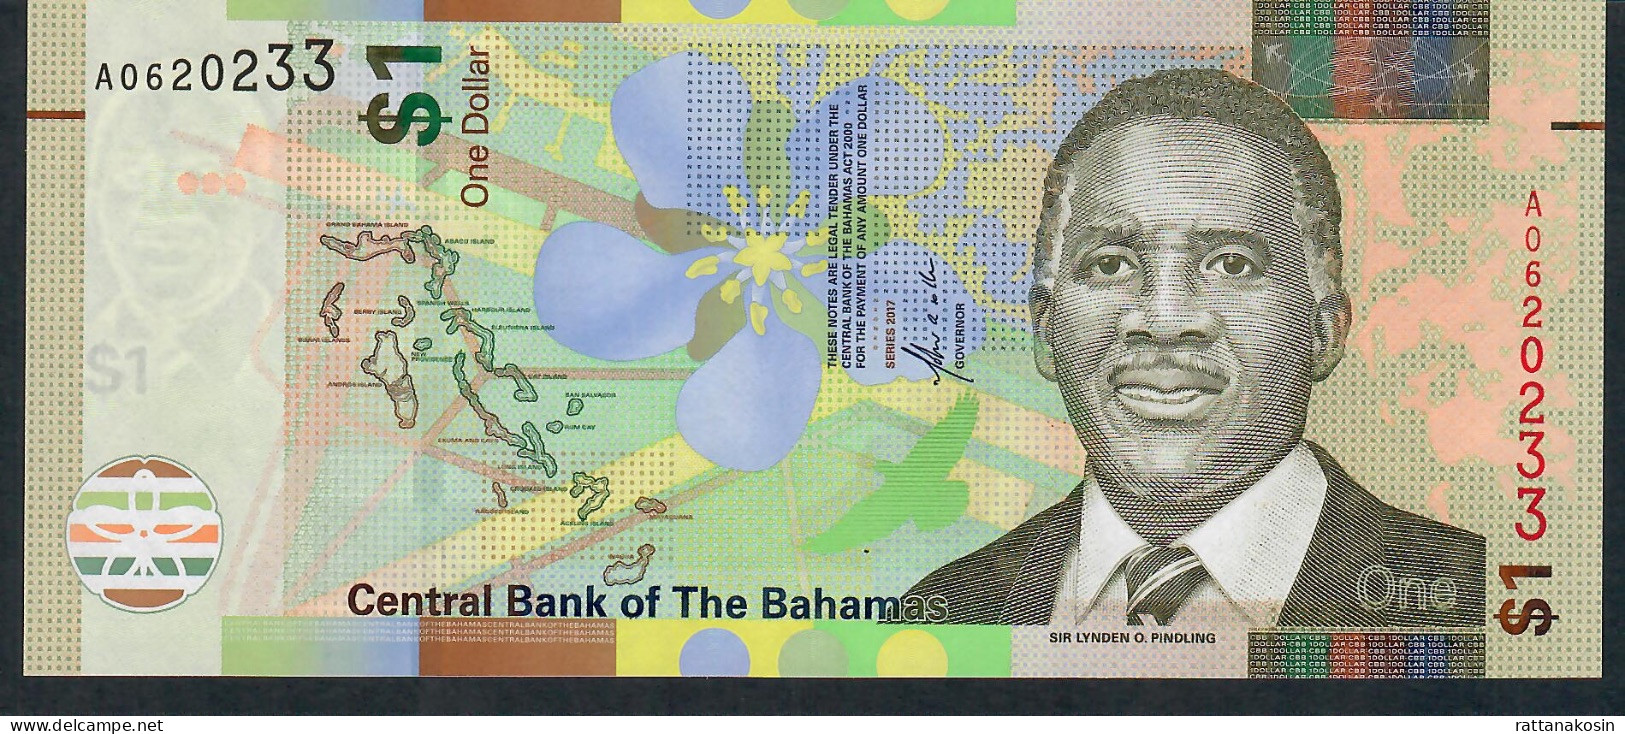 BAHAMAS P77a 1 DOLLAR 2017 UNC. - Bahamas